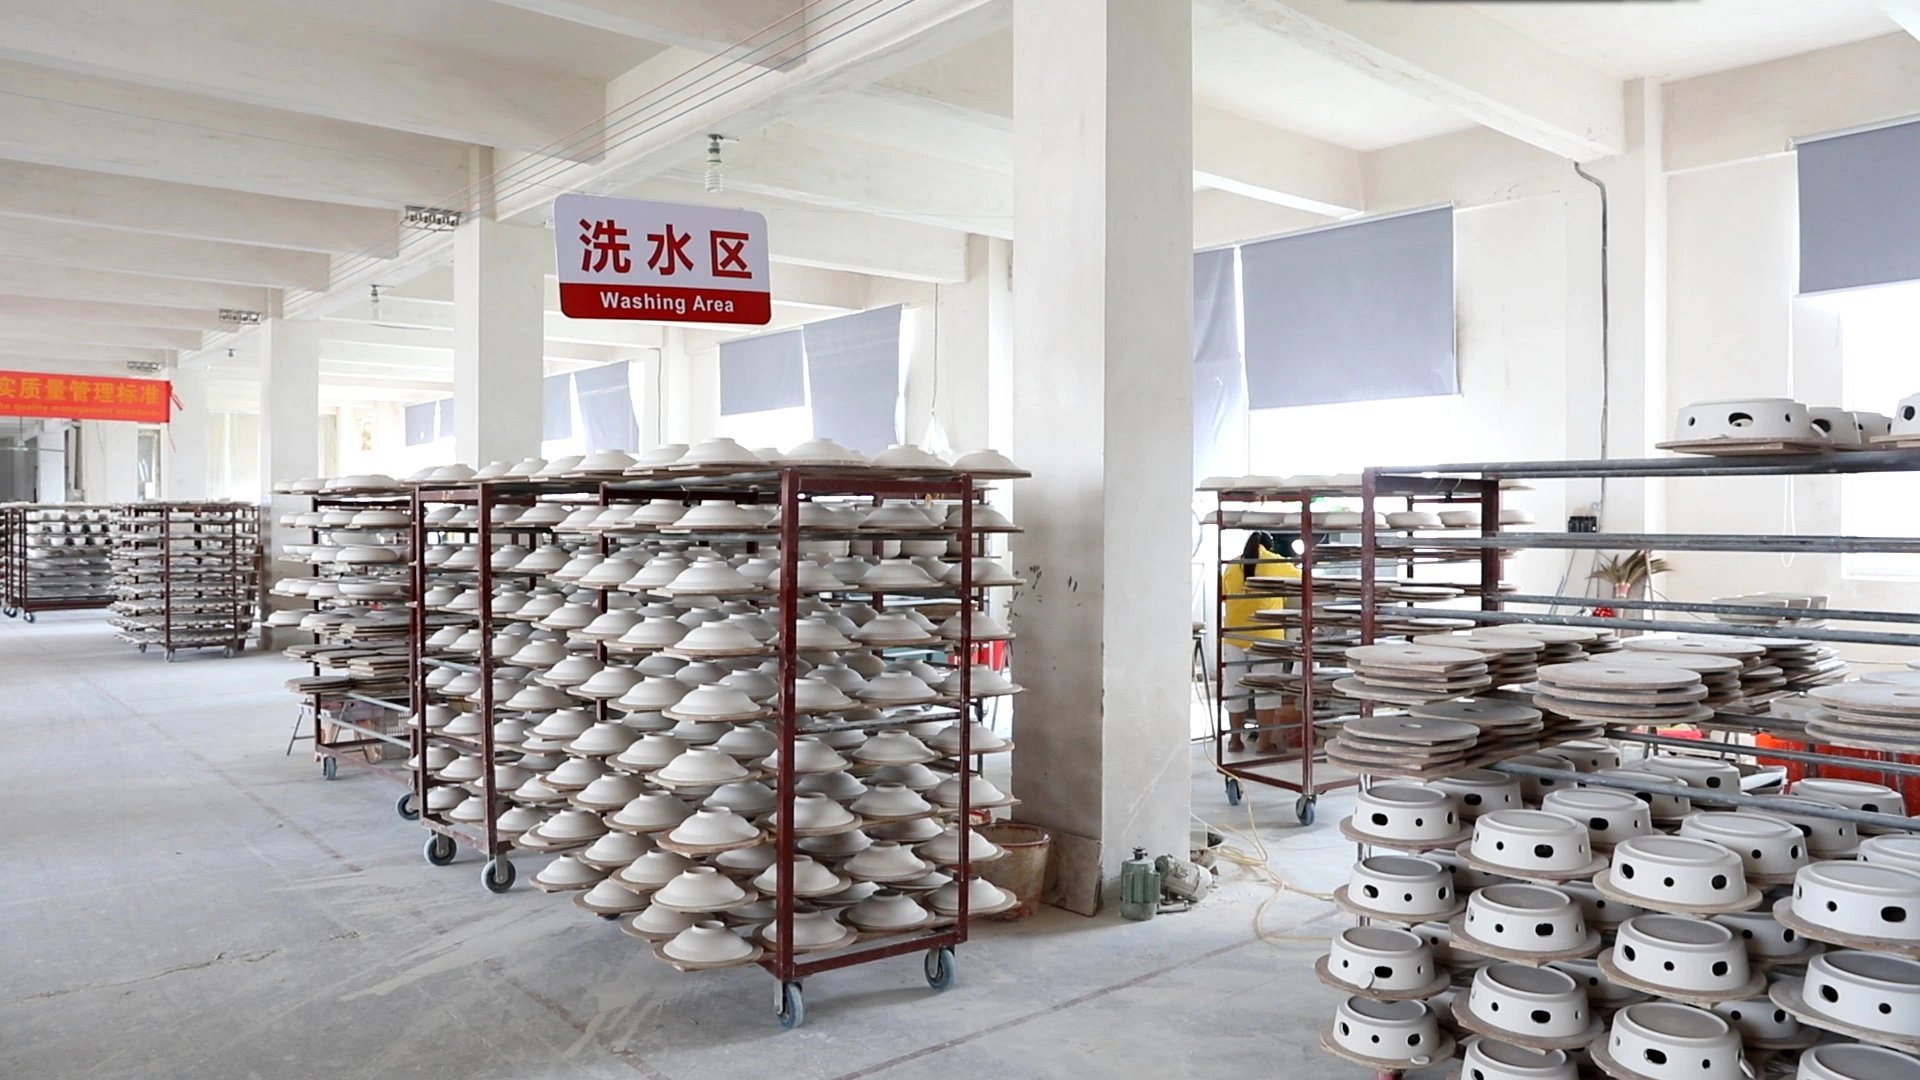 Two eight ceramics factory floor - Water District